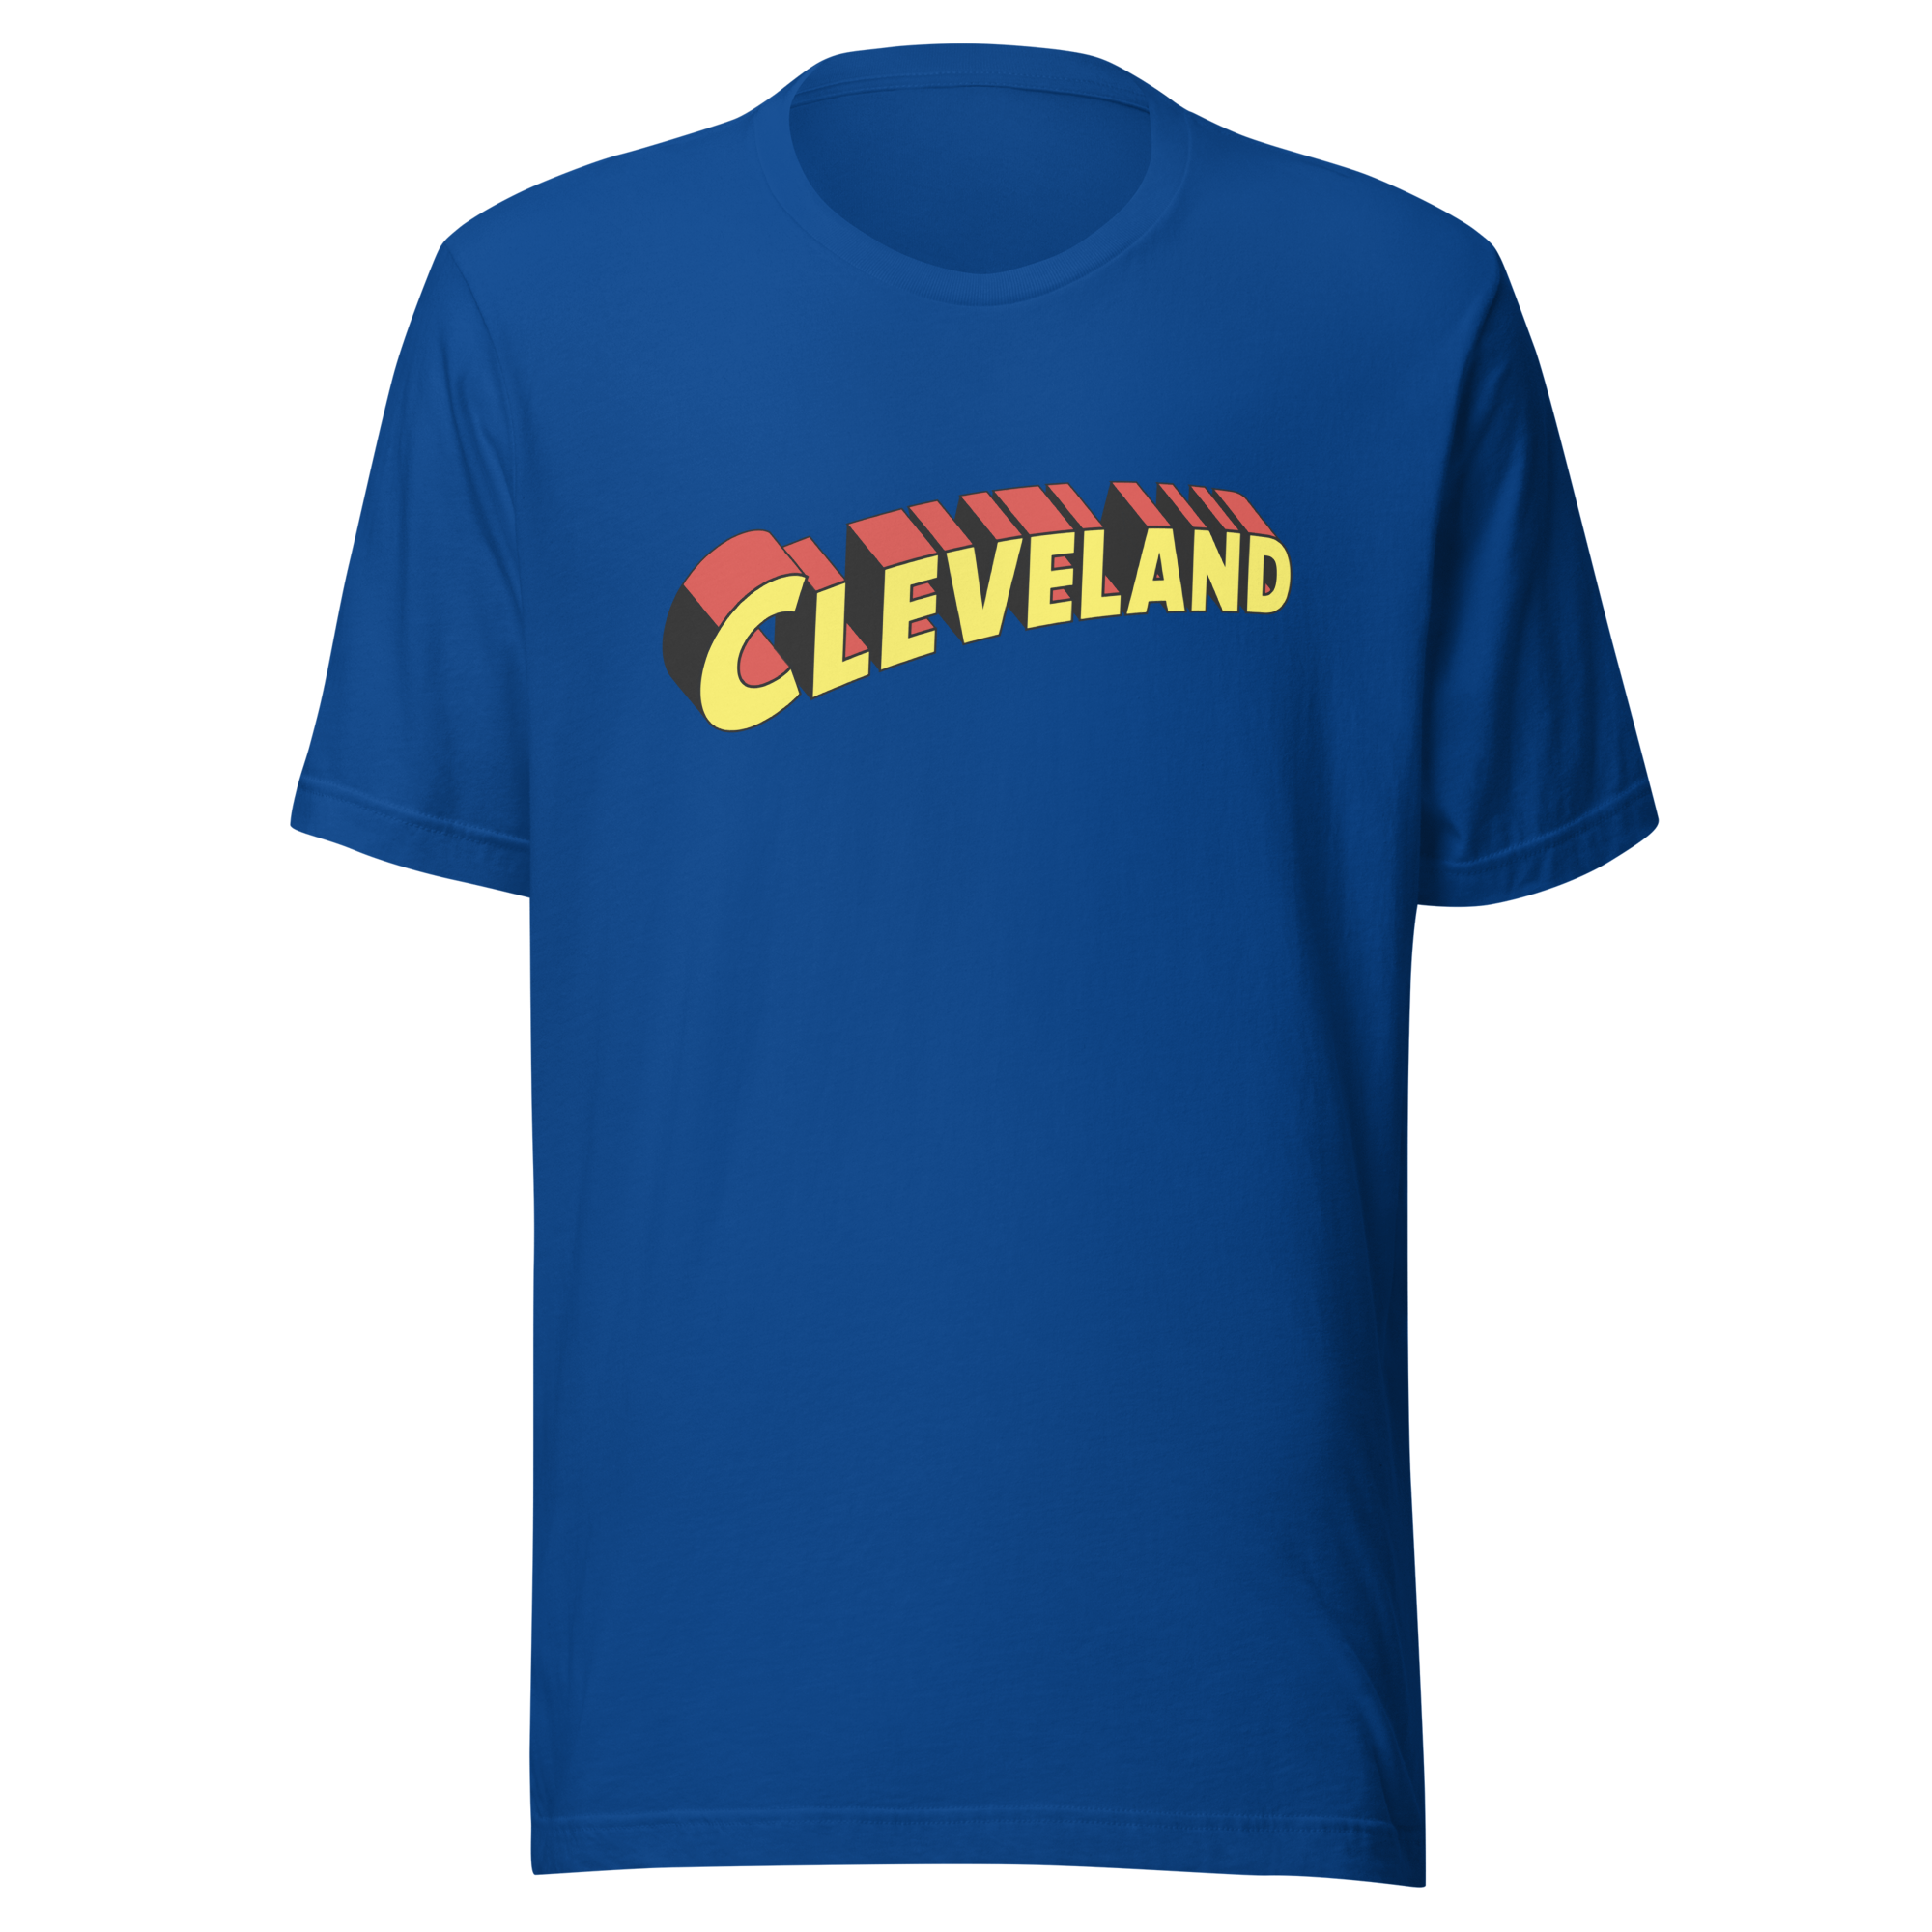 Cleveland Superhero T-Shirt